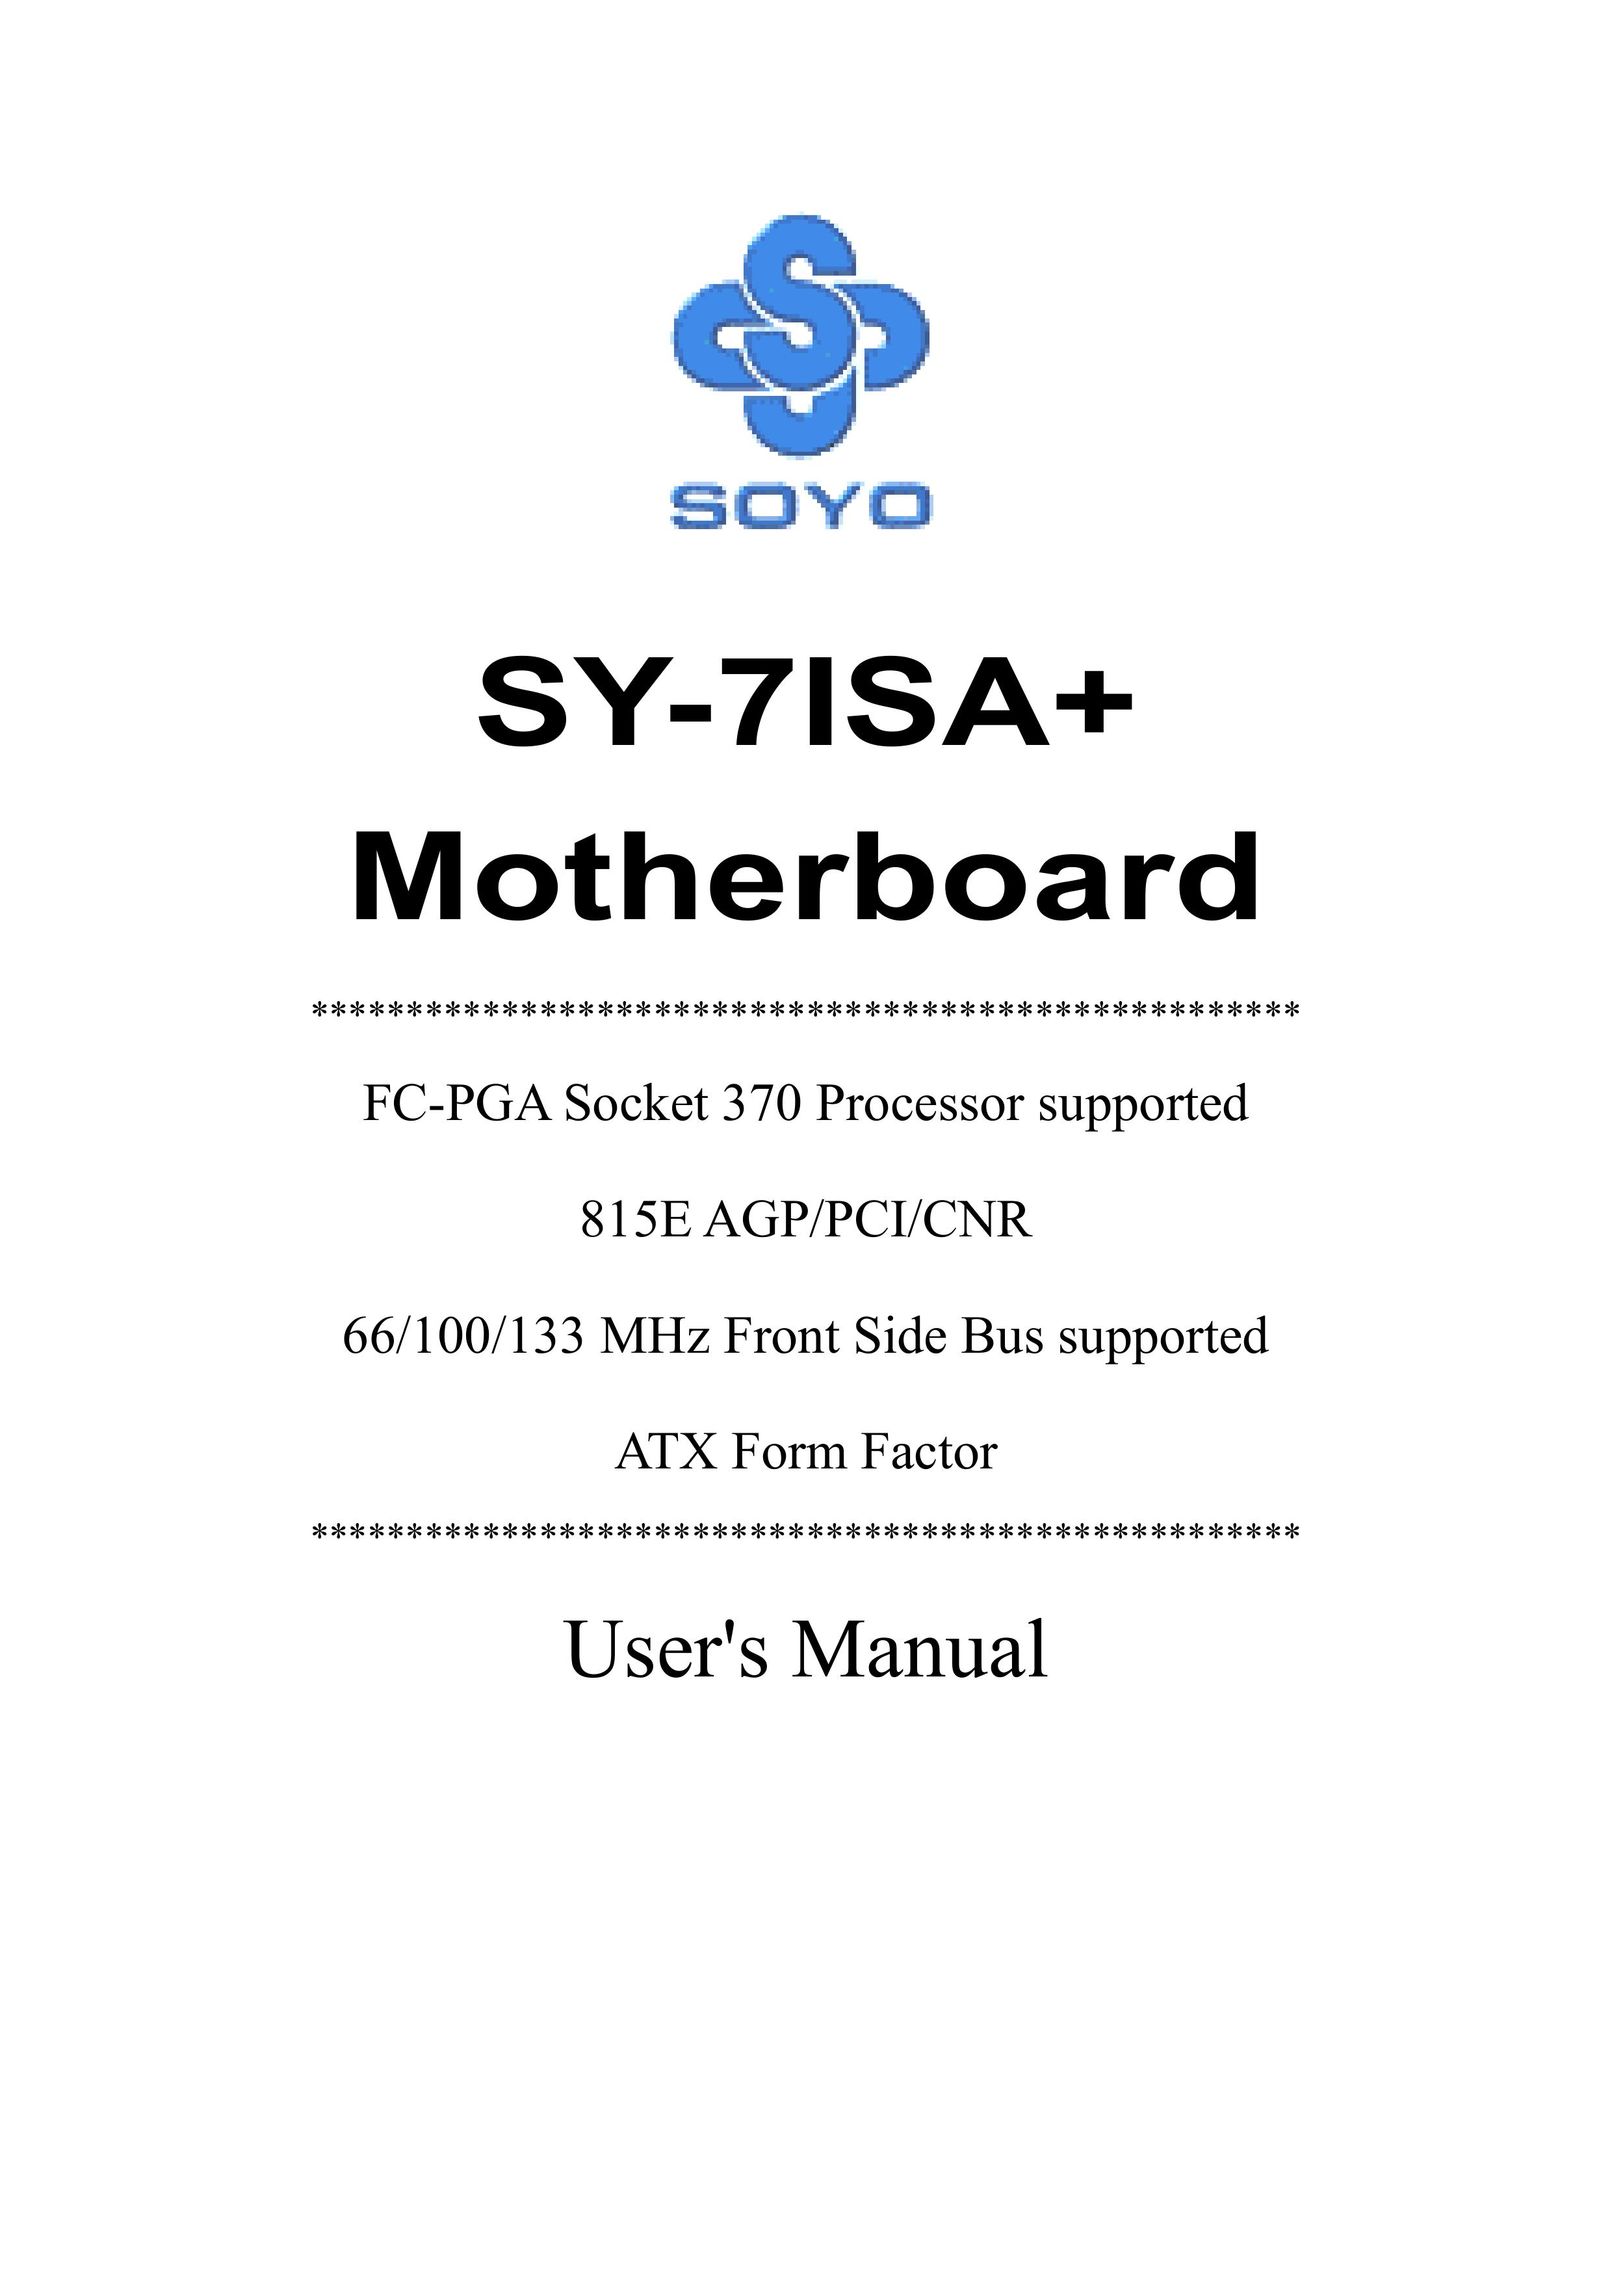 SOYO mother board fc-pga socket 370 pocessor supported Computer Hardware User Manual